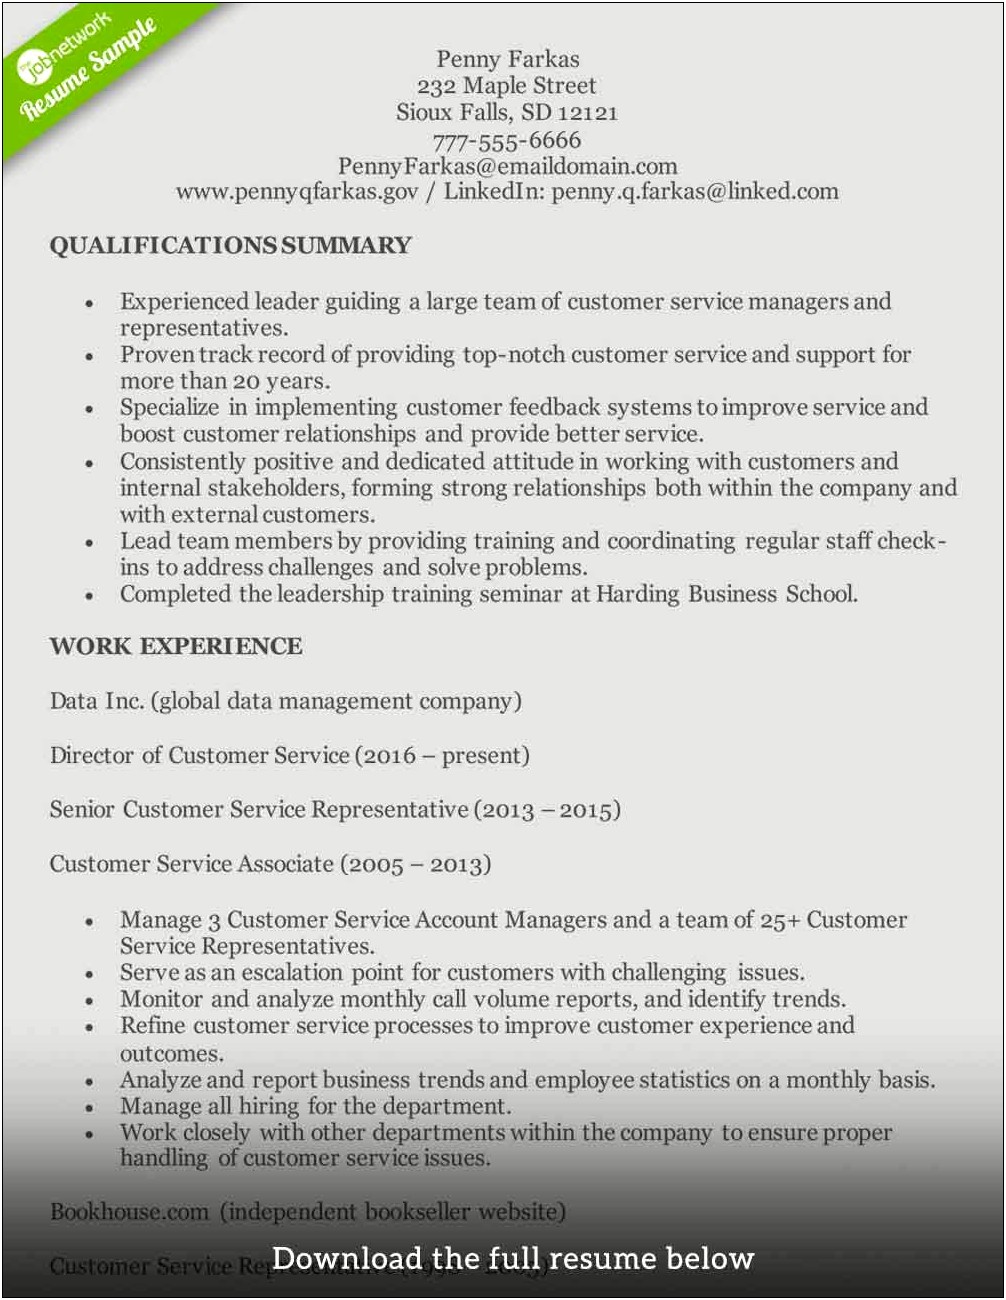 Work Experience Resume Customer Service Associatw